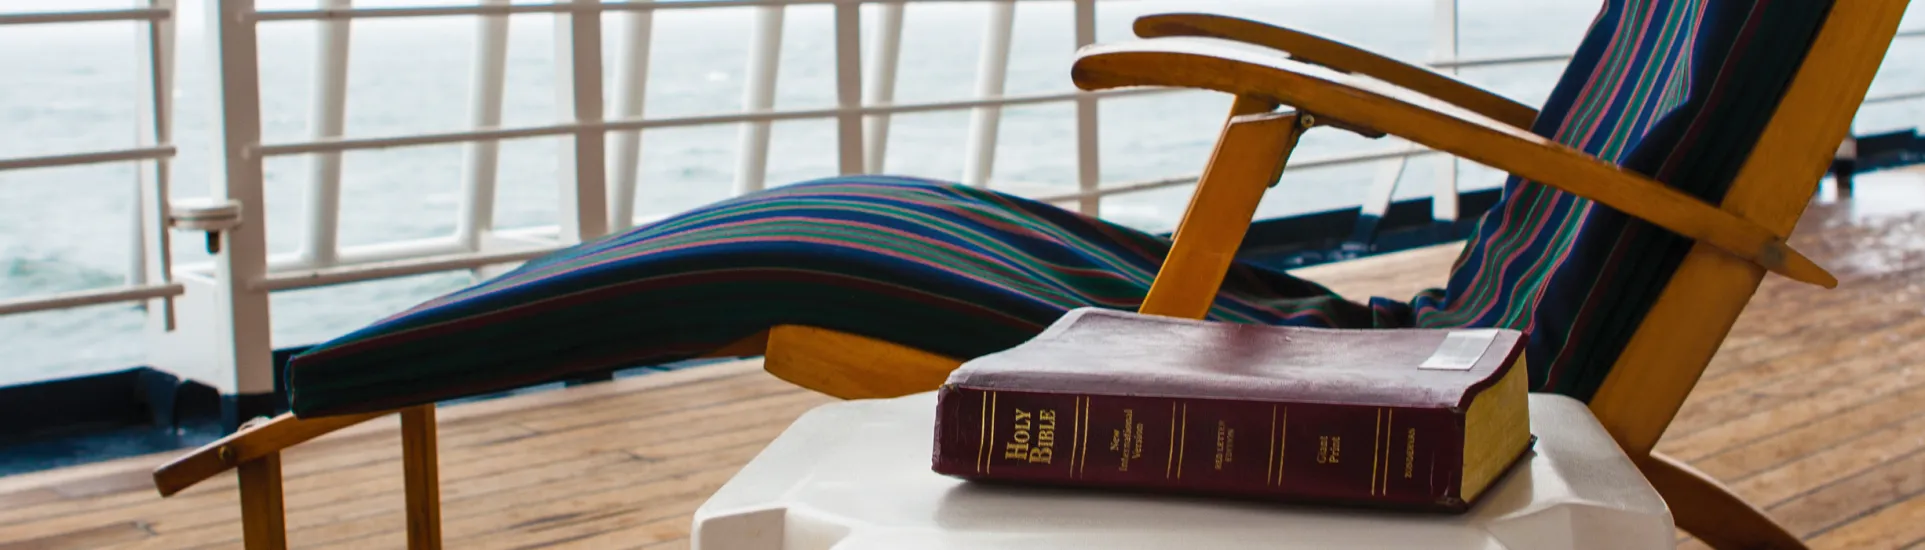 Bible On Cruise